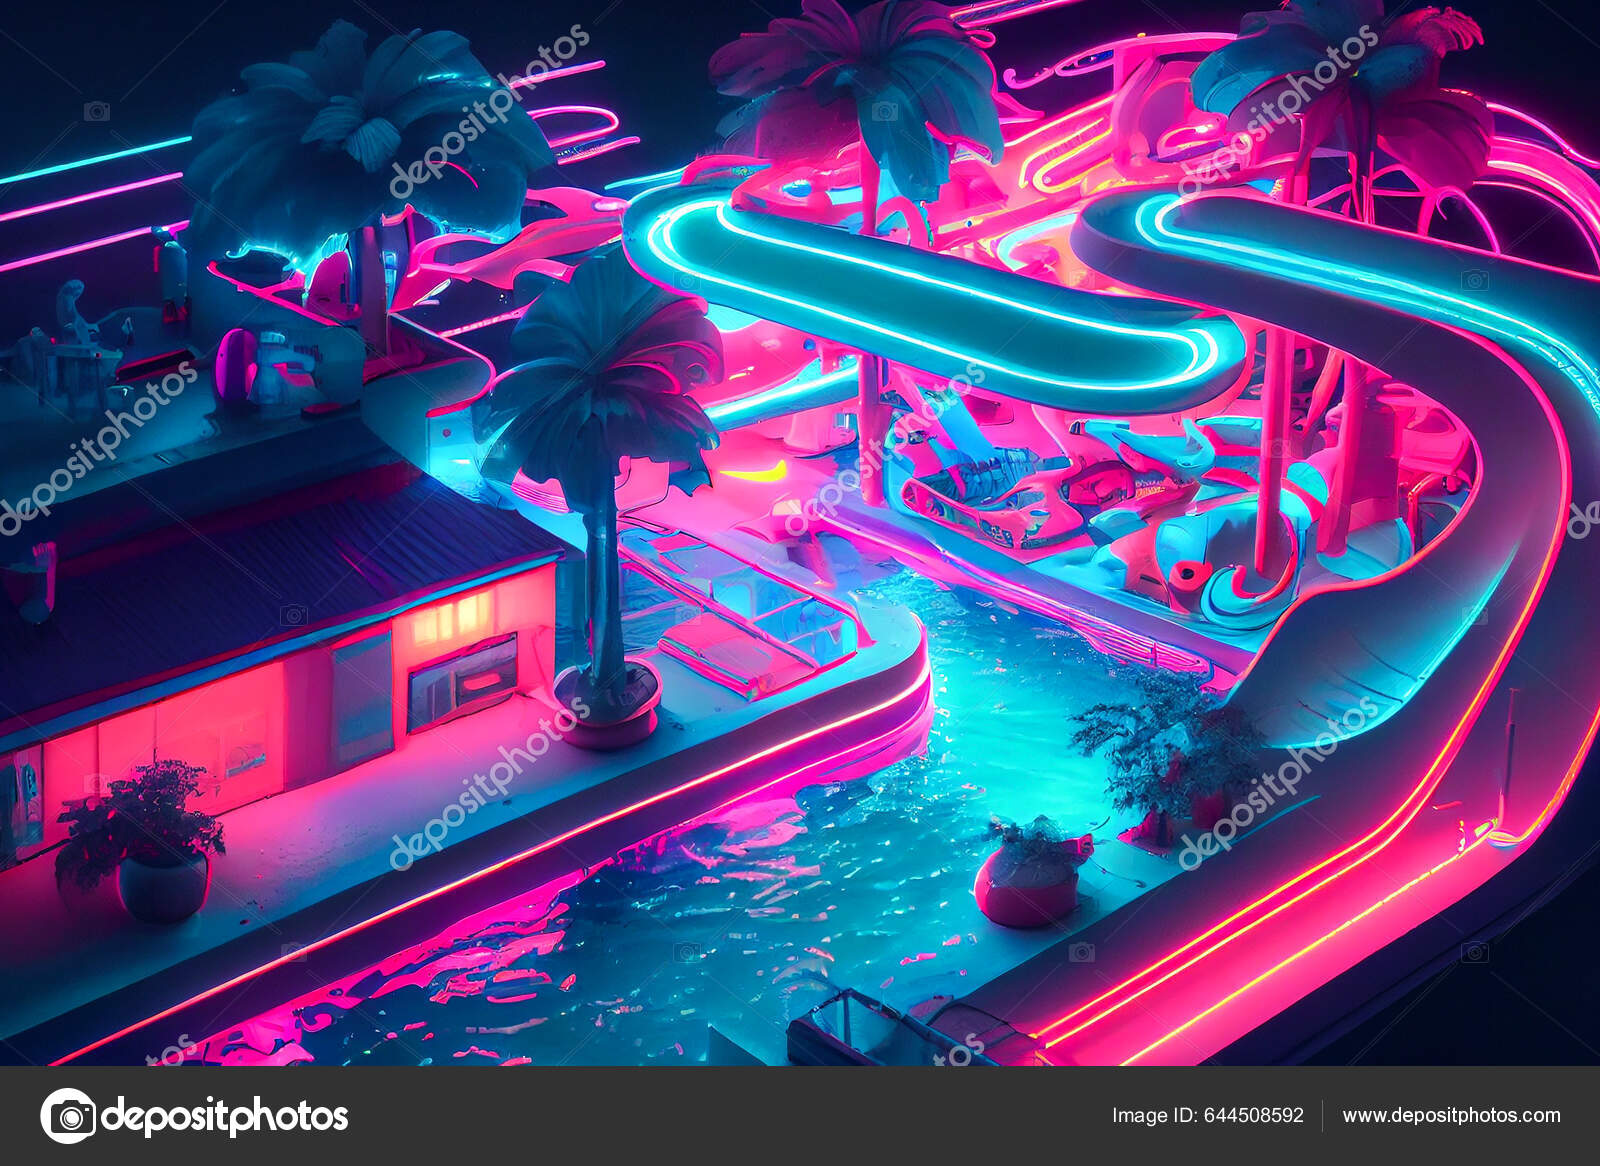 cyberpunk neon retro - Playground